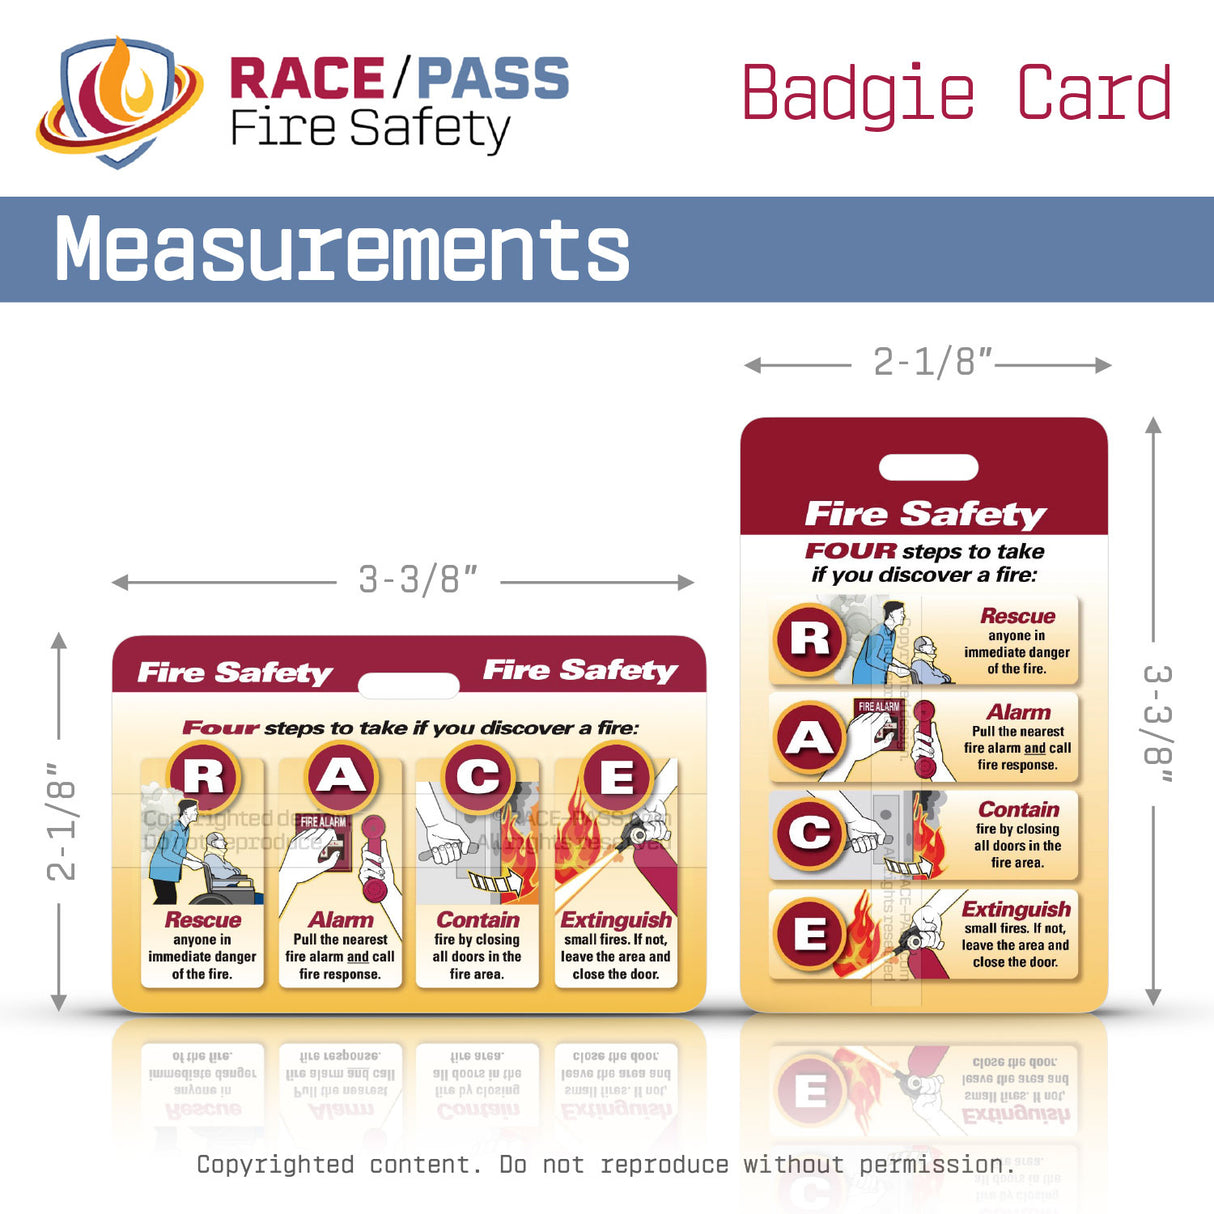 RACE/PASS Fire Safety Badgie Card Measurements.  Horizontal 3-3/8" wide x 2-1/8" high.  Vertical 2-1/8" w x  3-3/8" high.